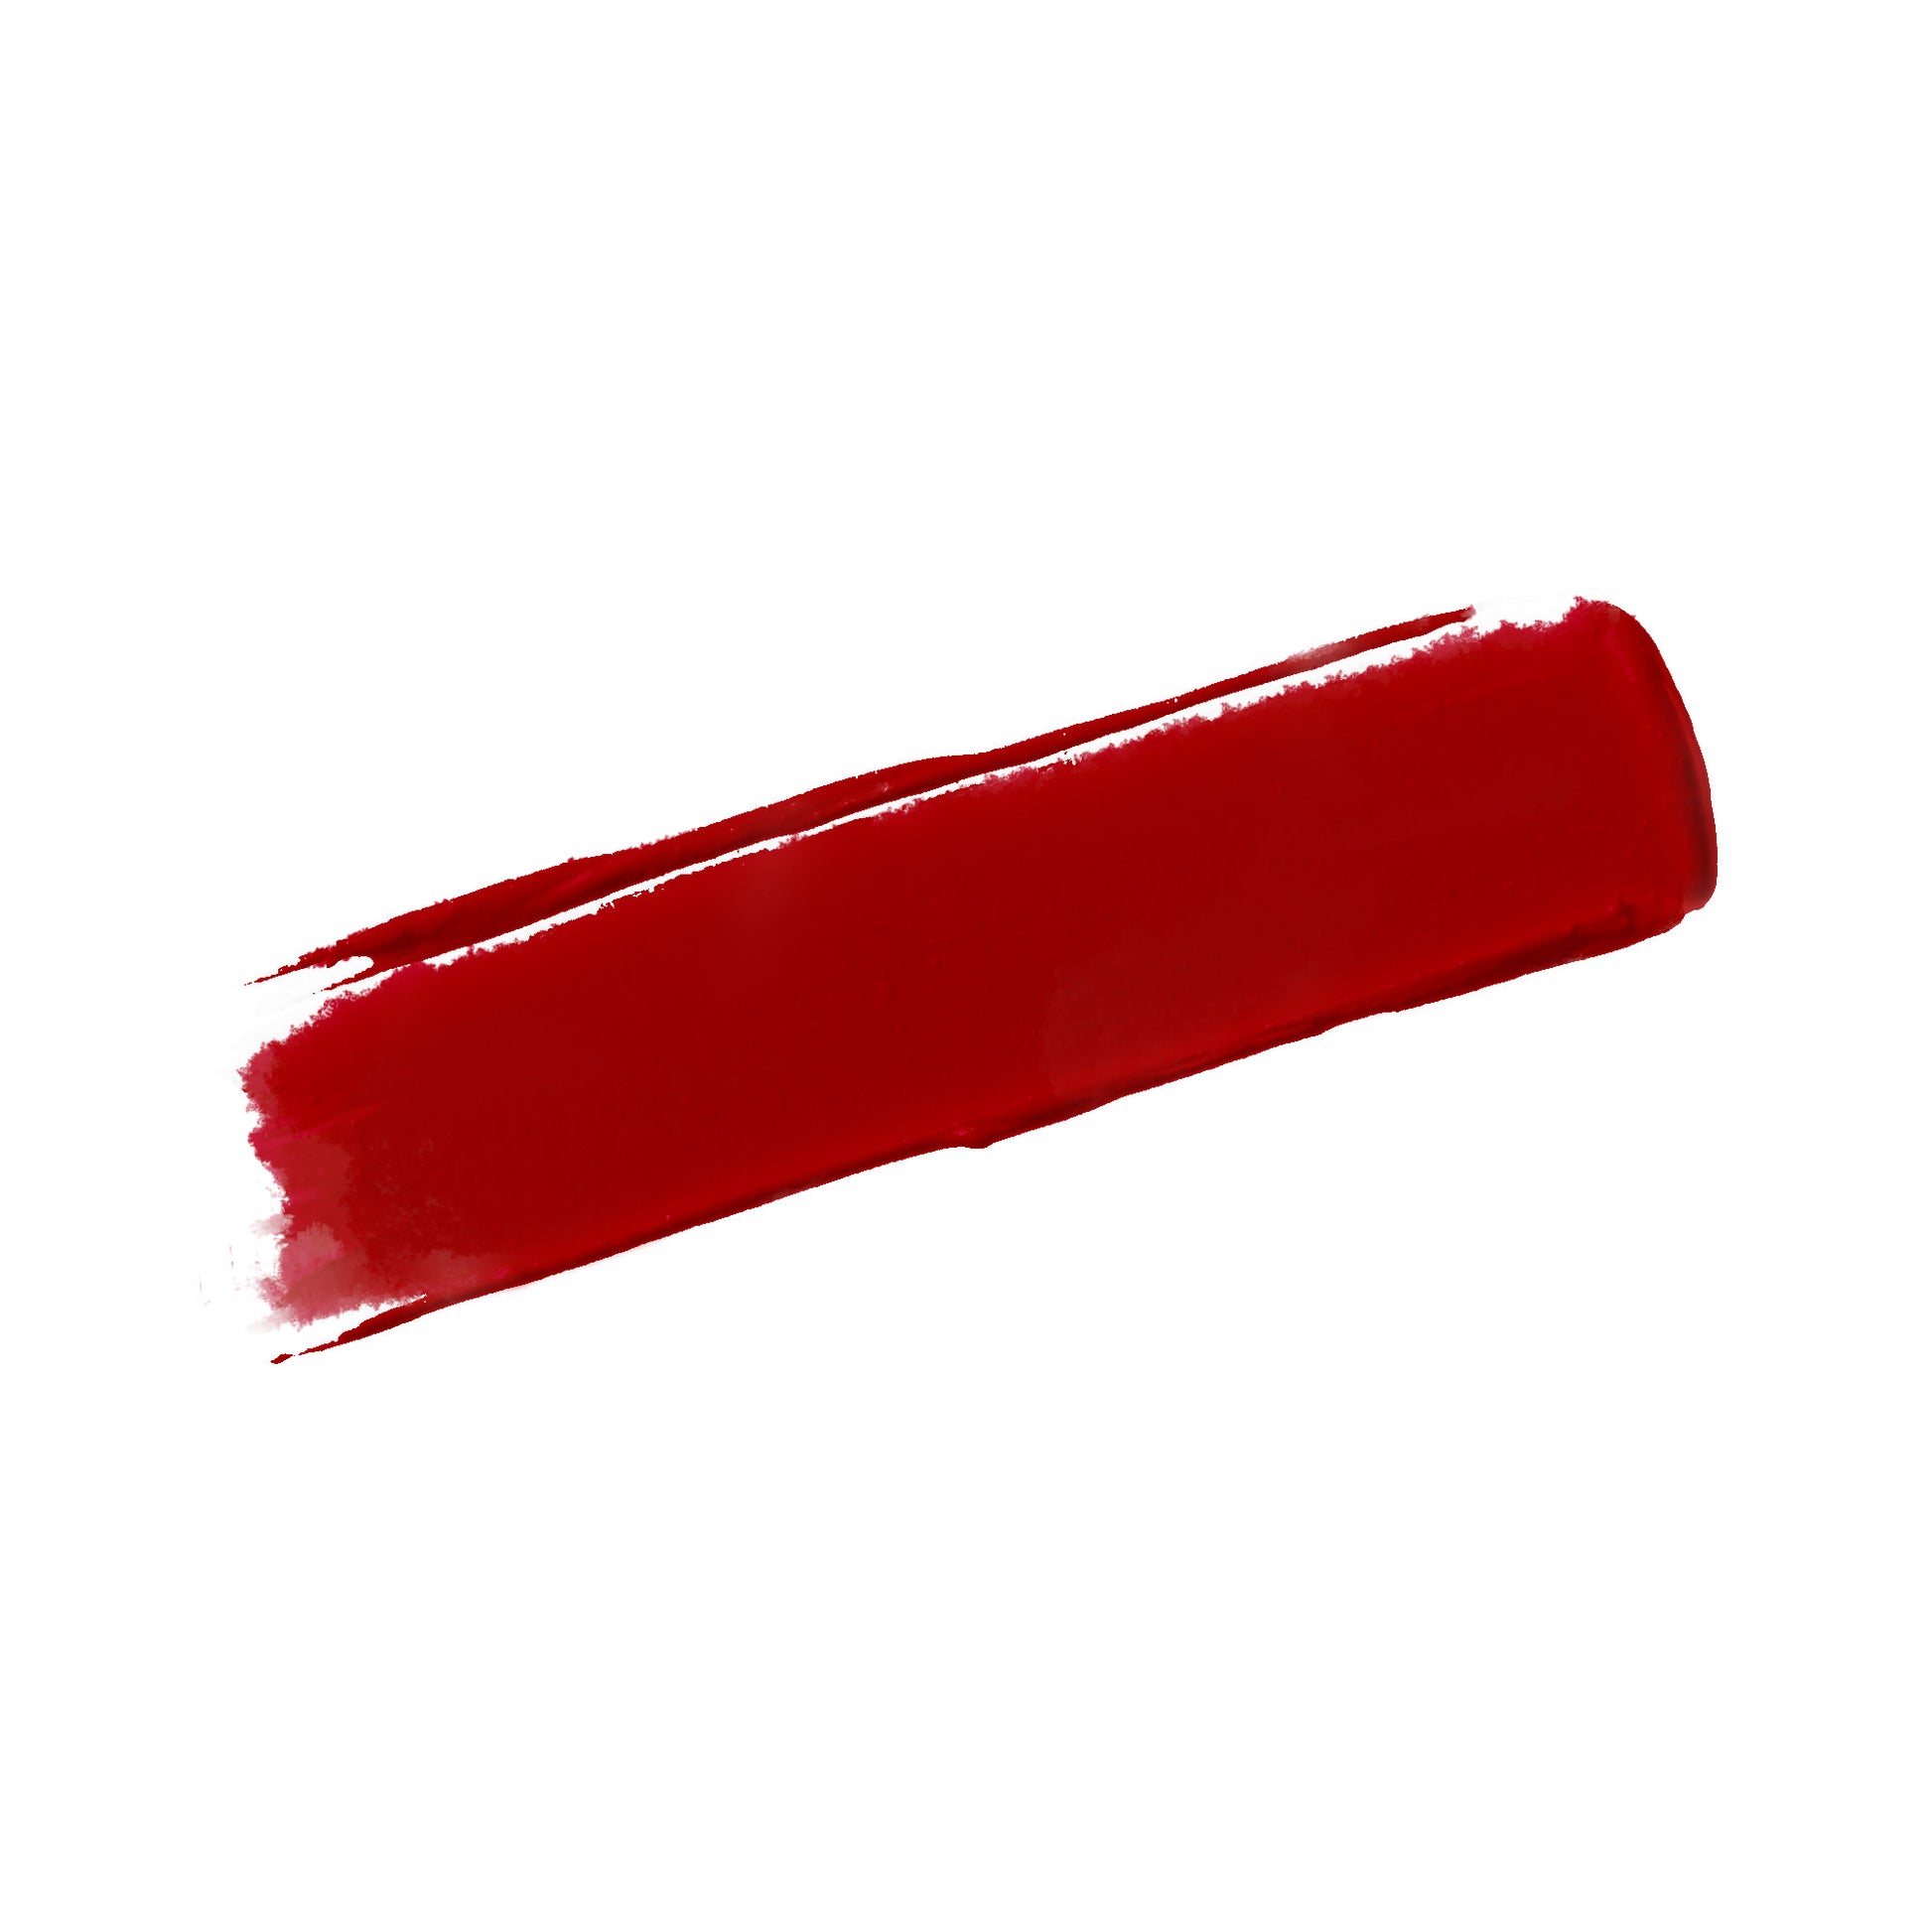 NXTE NXTEssence Love Bite Liquid Lip Stick Color Swatch